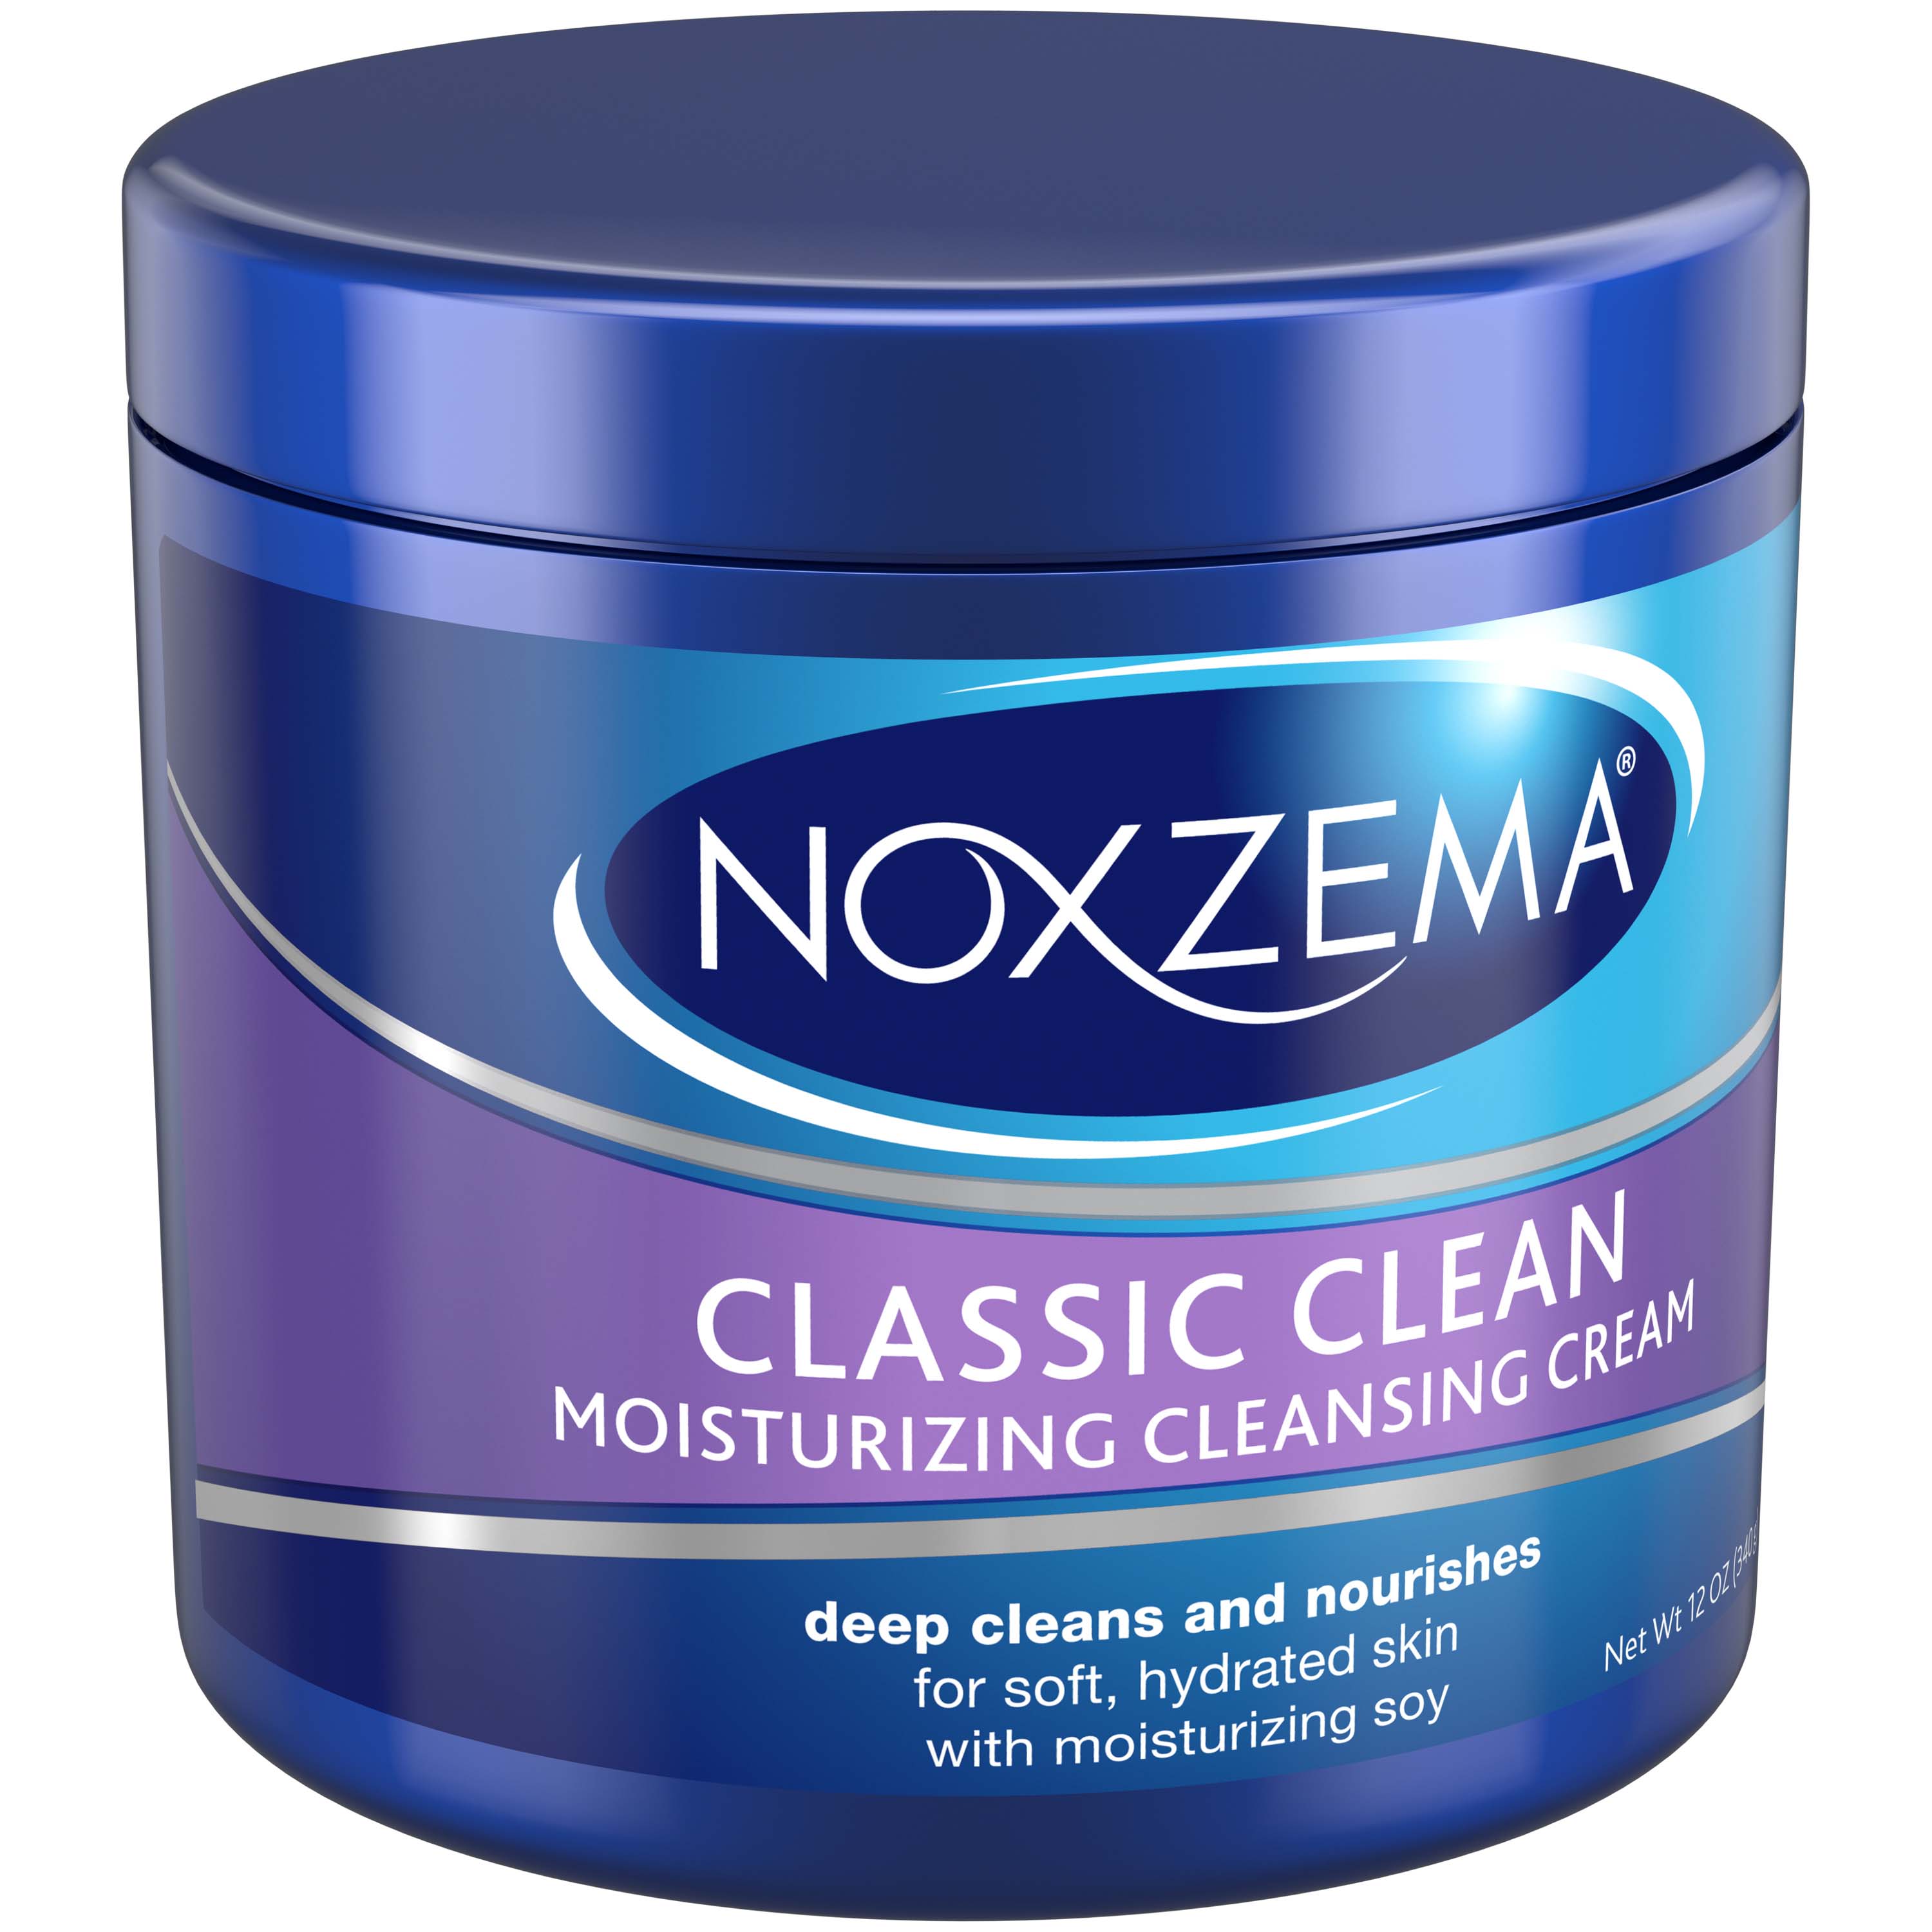 Noxzema Classic Clean, Moisturizing Cleansing Cream 12 oz - image 2 of 10